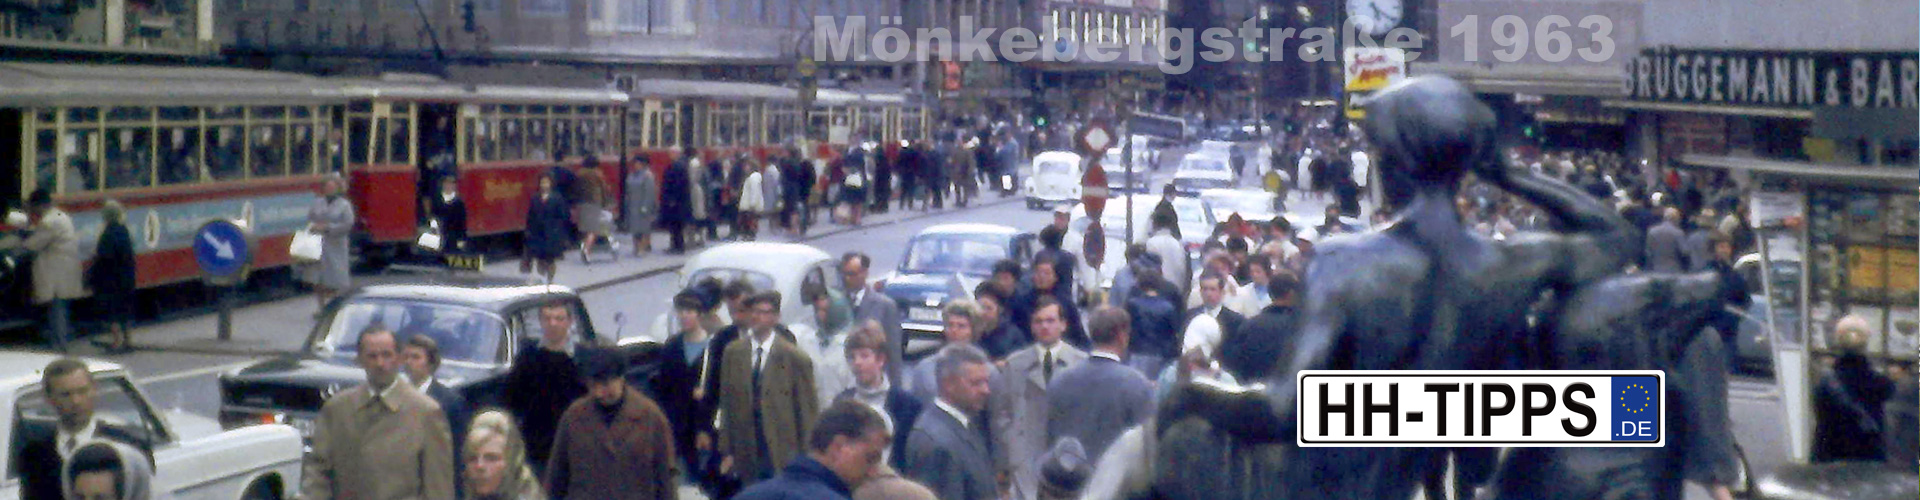 Mönkebergstraße 1963